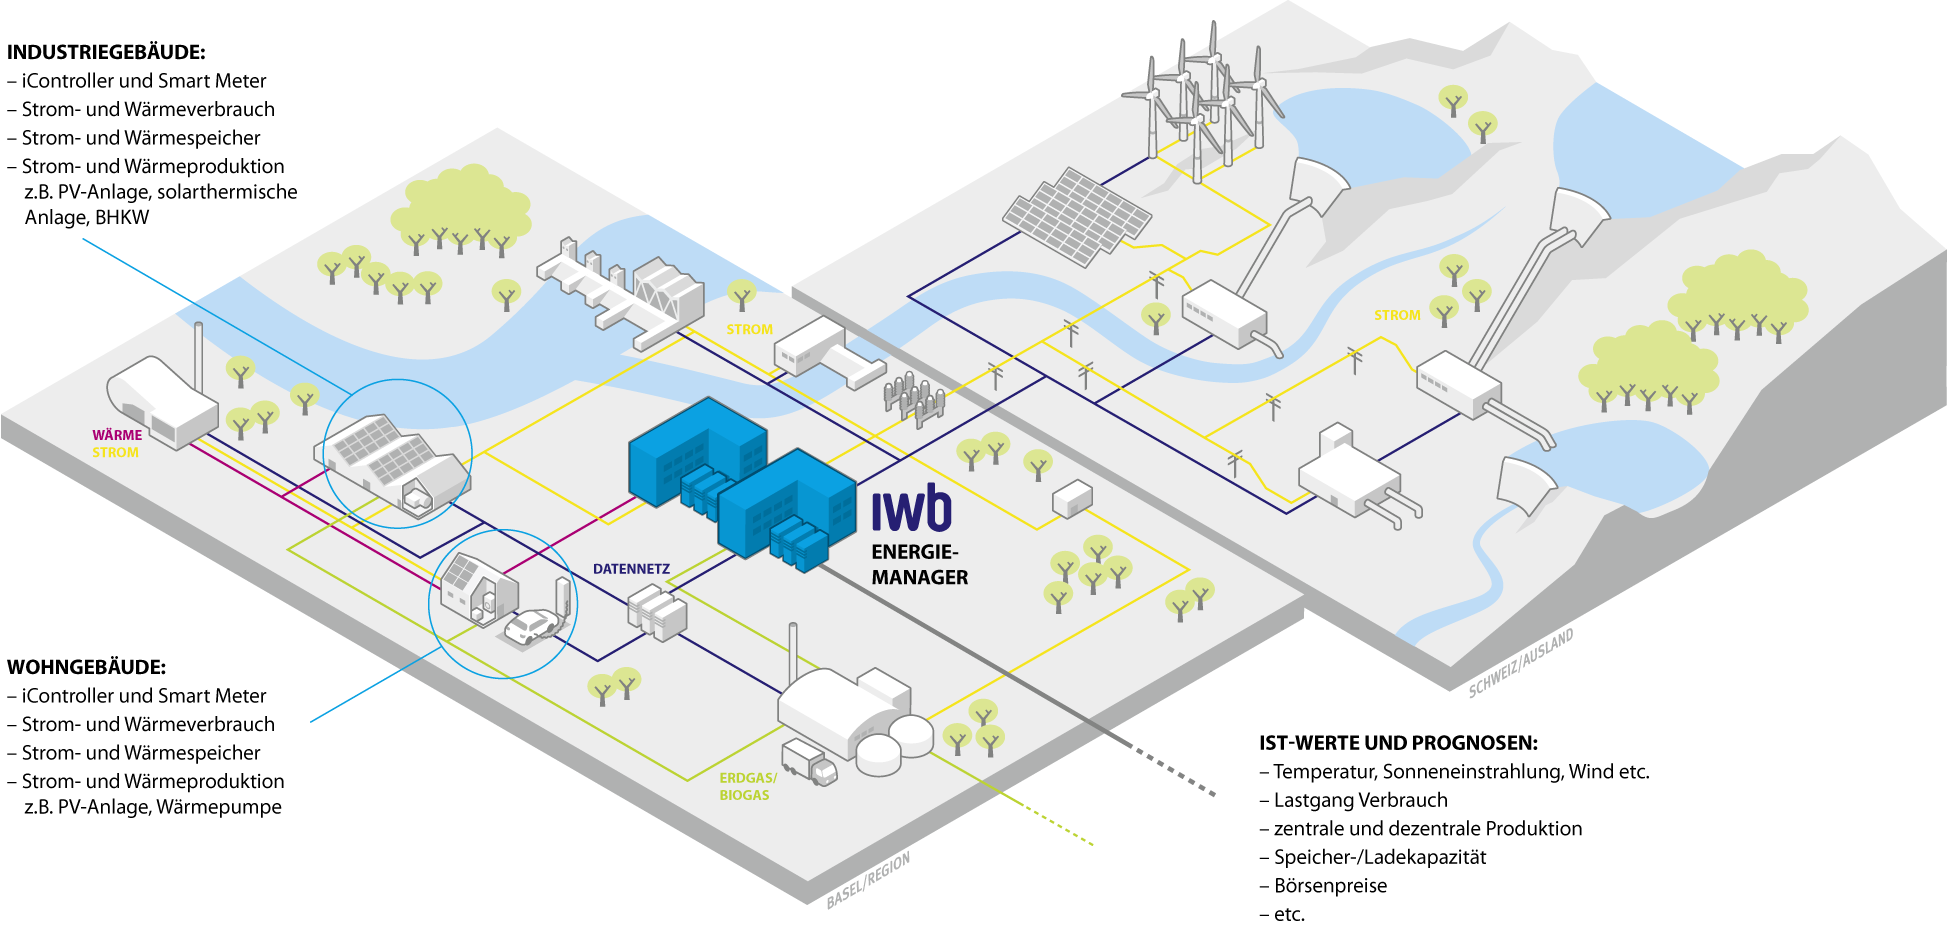 Industrieprojekt IRPsim Integrierte Ressourcenplanung Simulation Energiestrategie 2050 CO 2